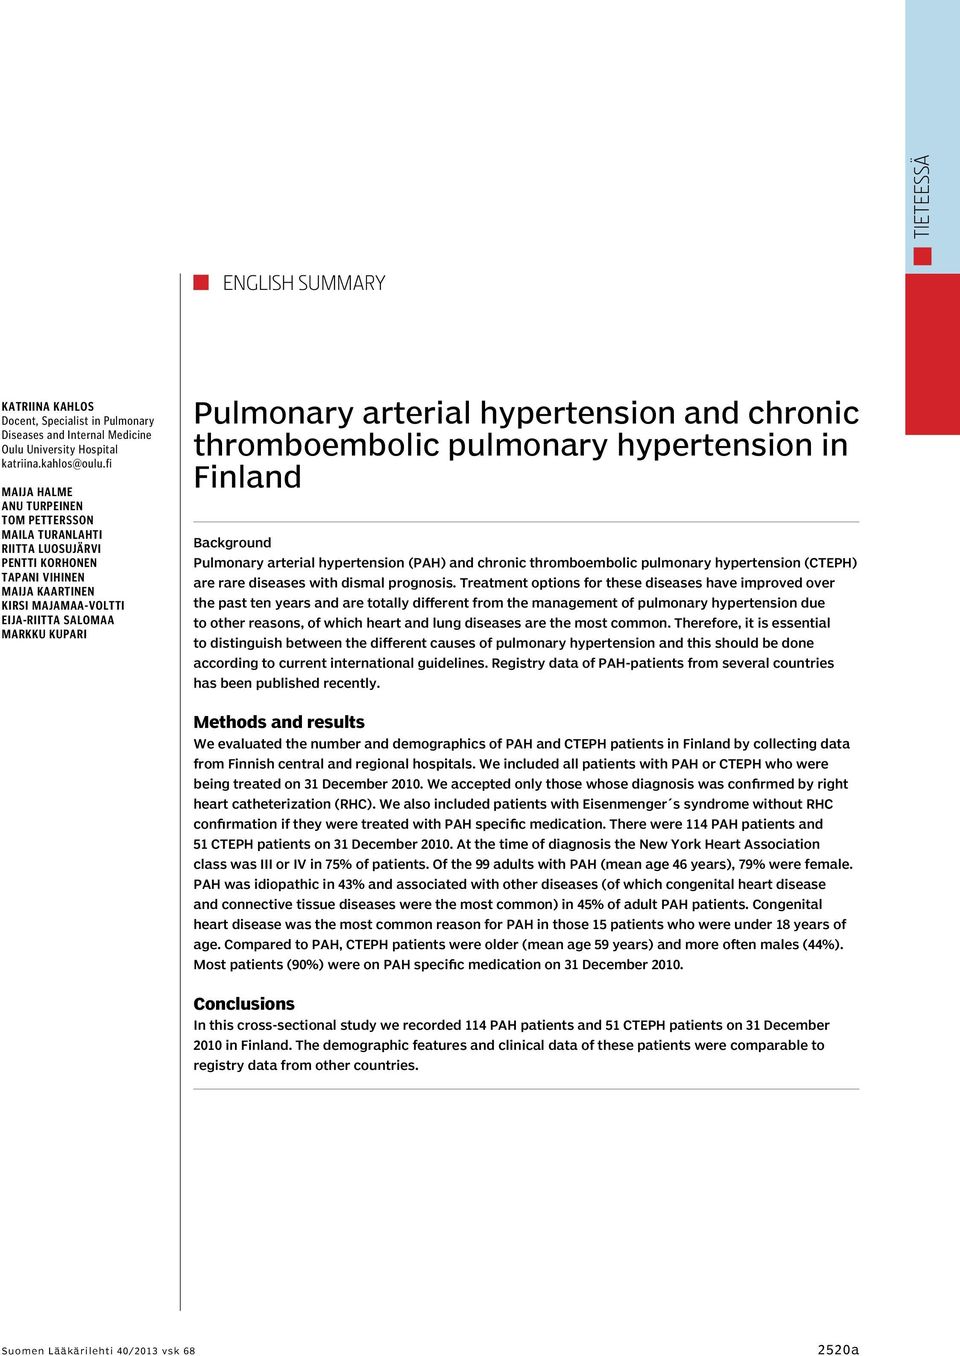 hypertension and chronic thromboembolic pulmonary hypertension in Finland Background Pulmonary arterial hypertension (PAH) and chronic thromboembolic pulmonary hypertension (CTEPH) are rare diseases